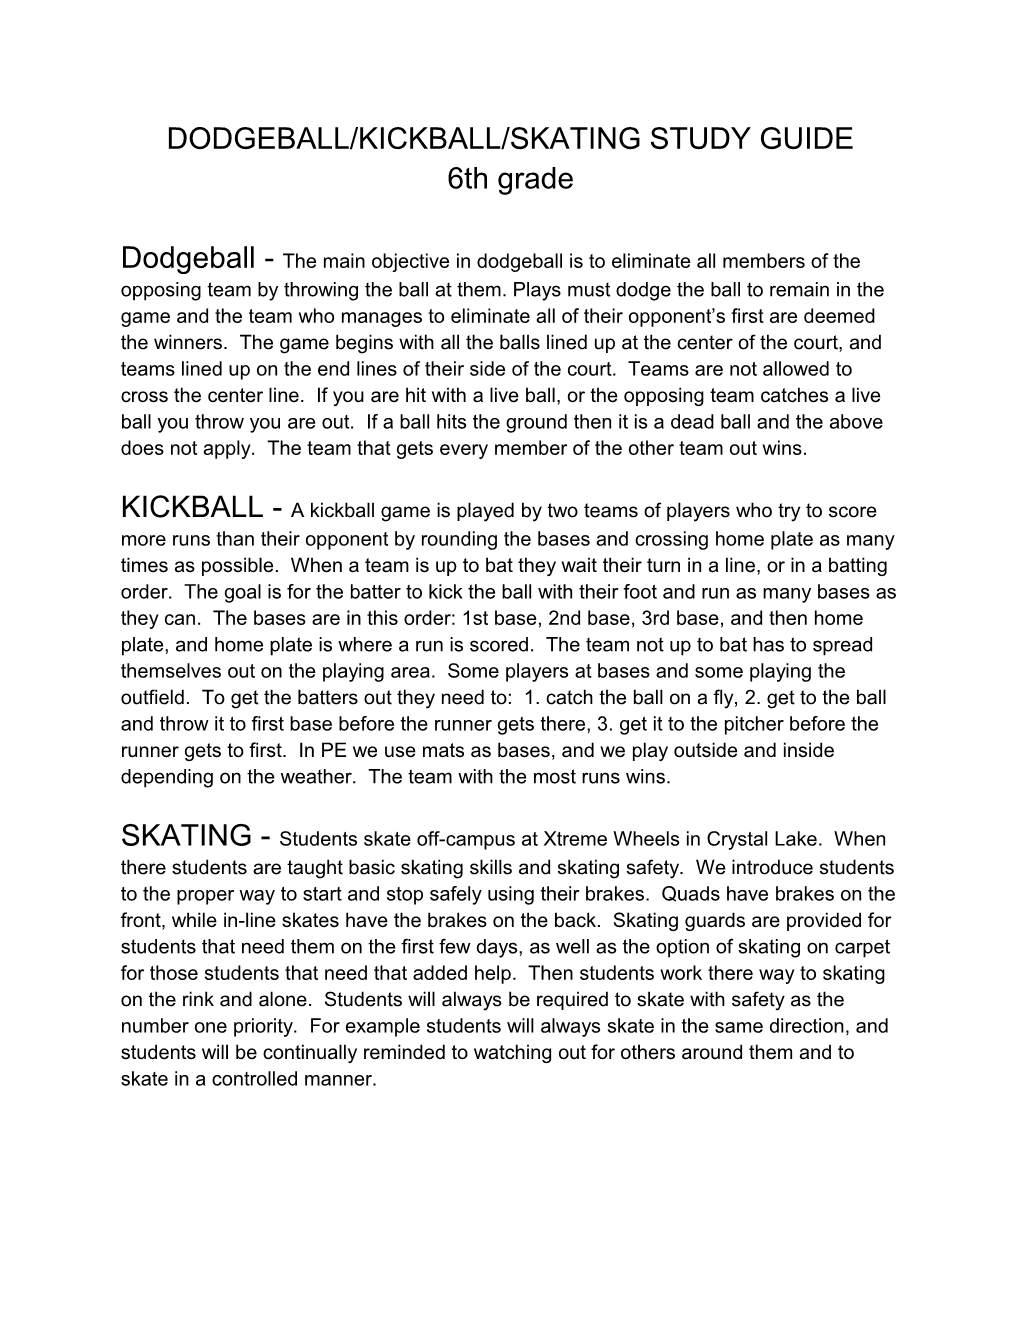 Dodgeball/Kickball/Skating Study Guide